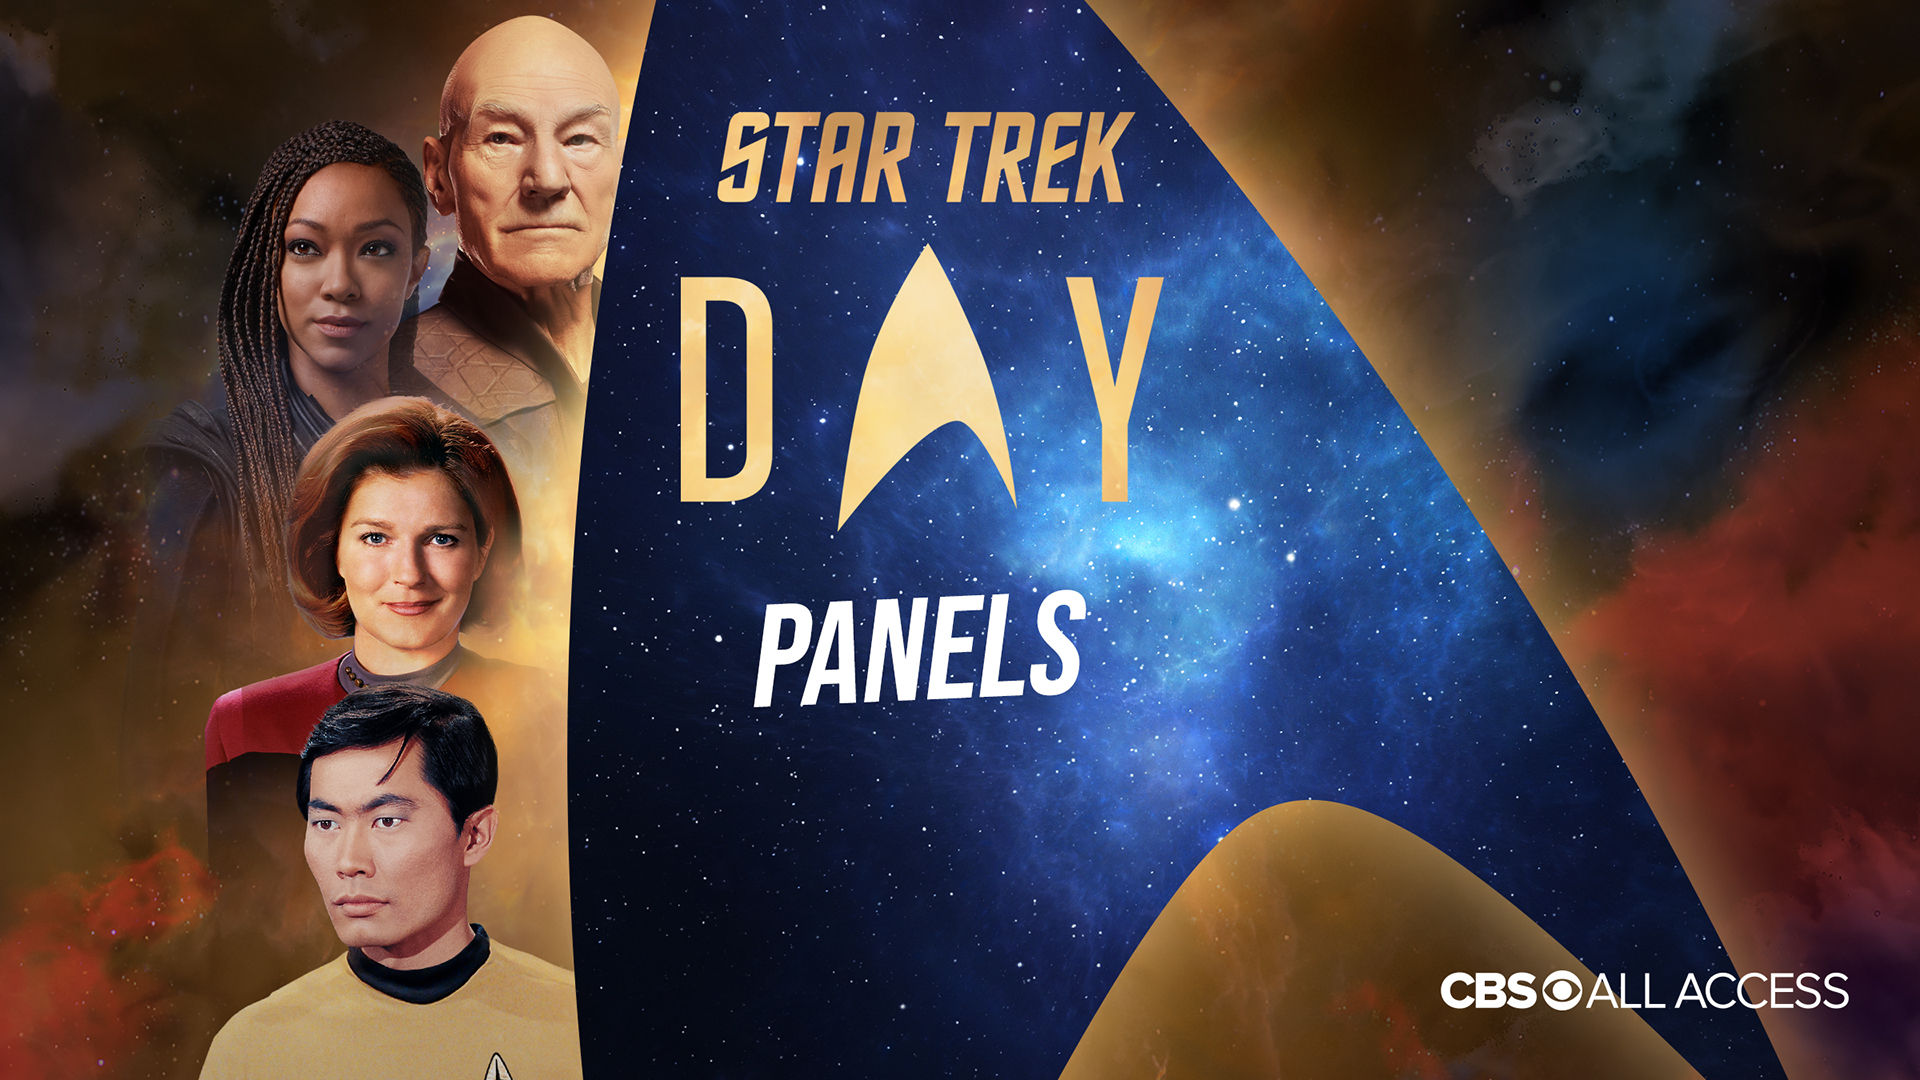 Star Trek Day 2020 Every Panel From The Star Trek Universe